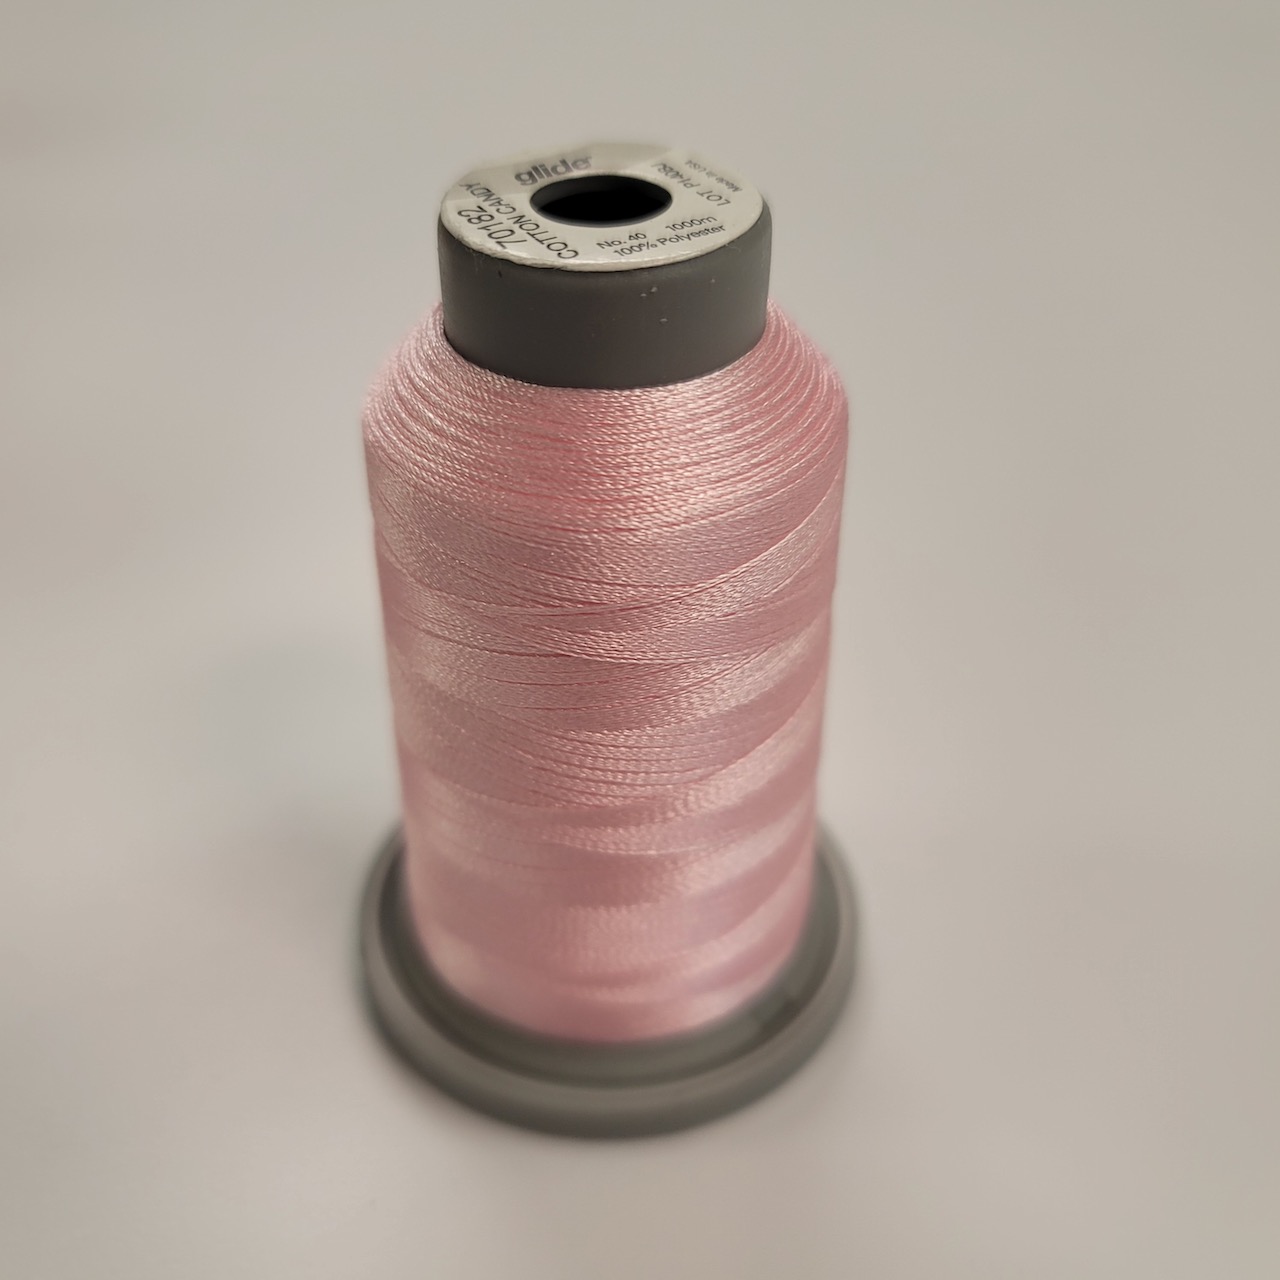 Cotton Candy Pink Glide Thread